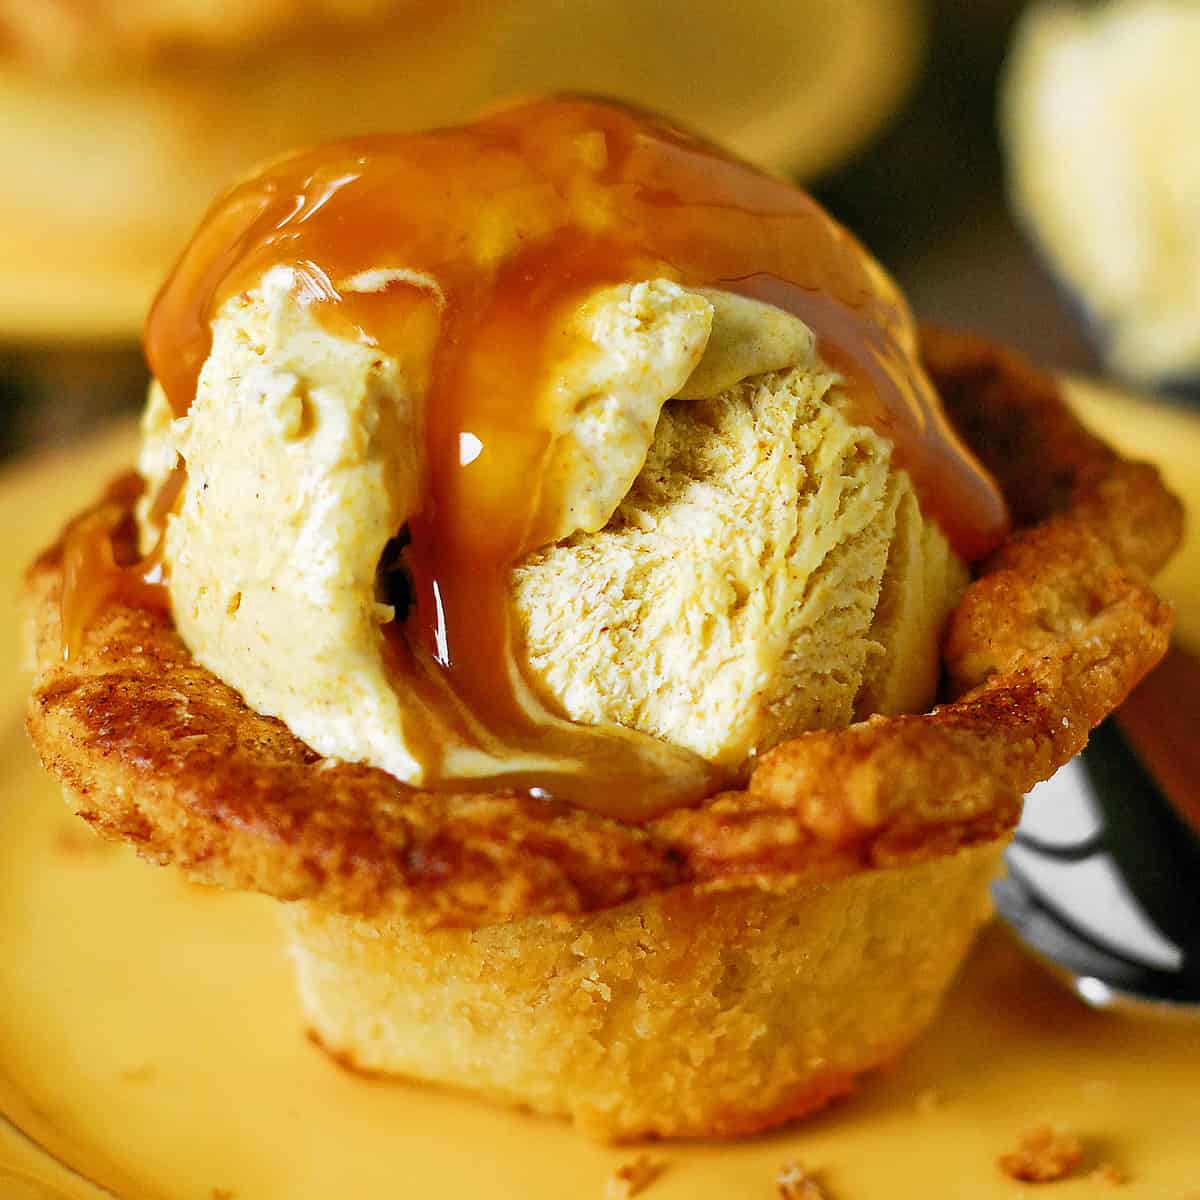 Warm caramel drizzled over pumpkin ice cream in a pie crust cup.